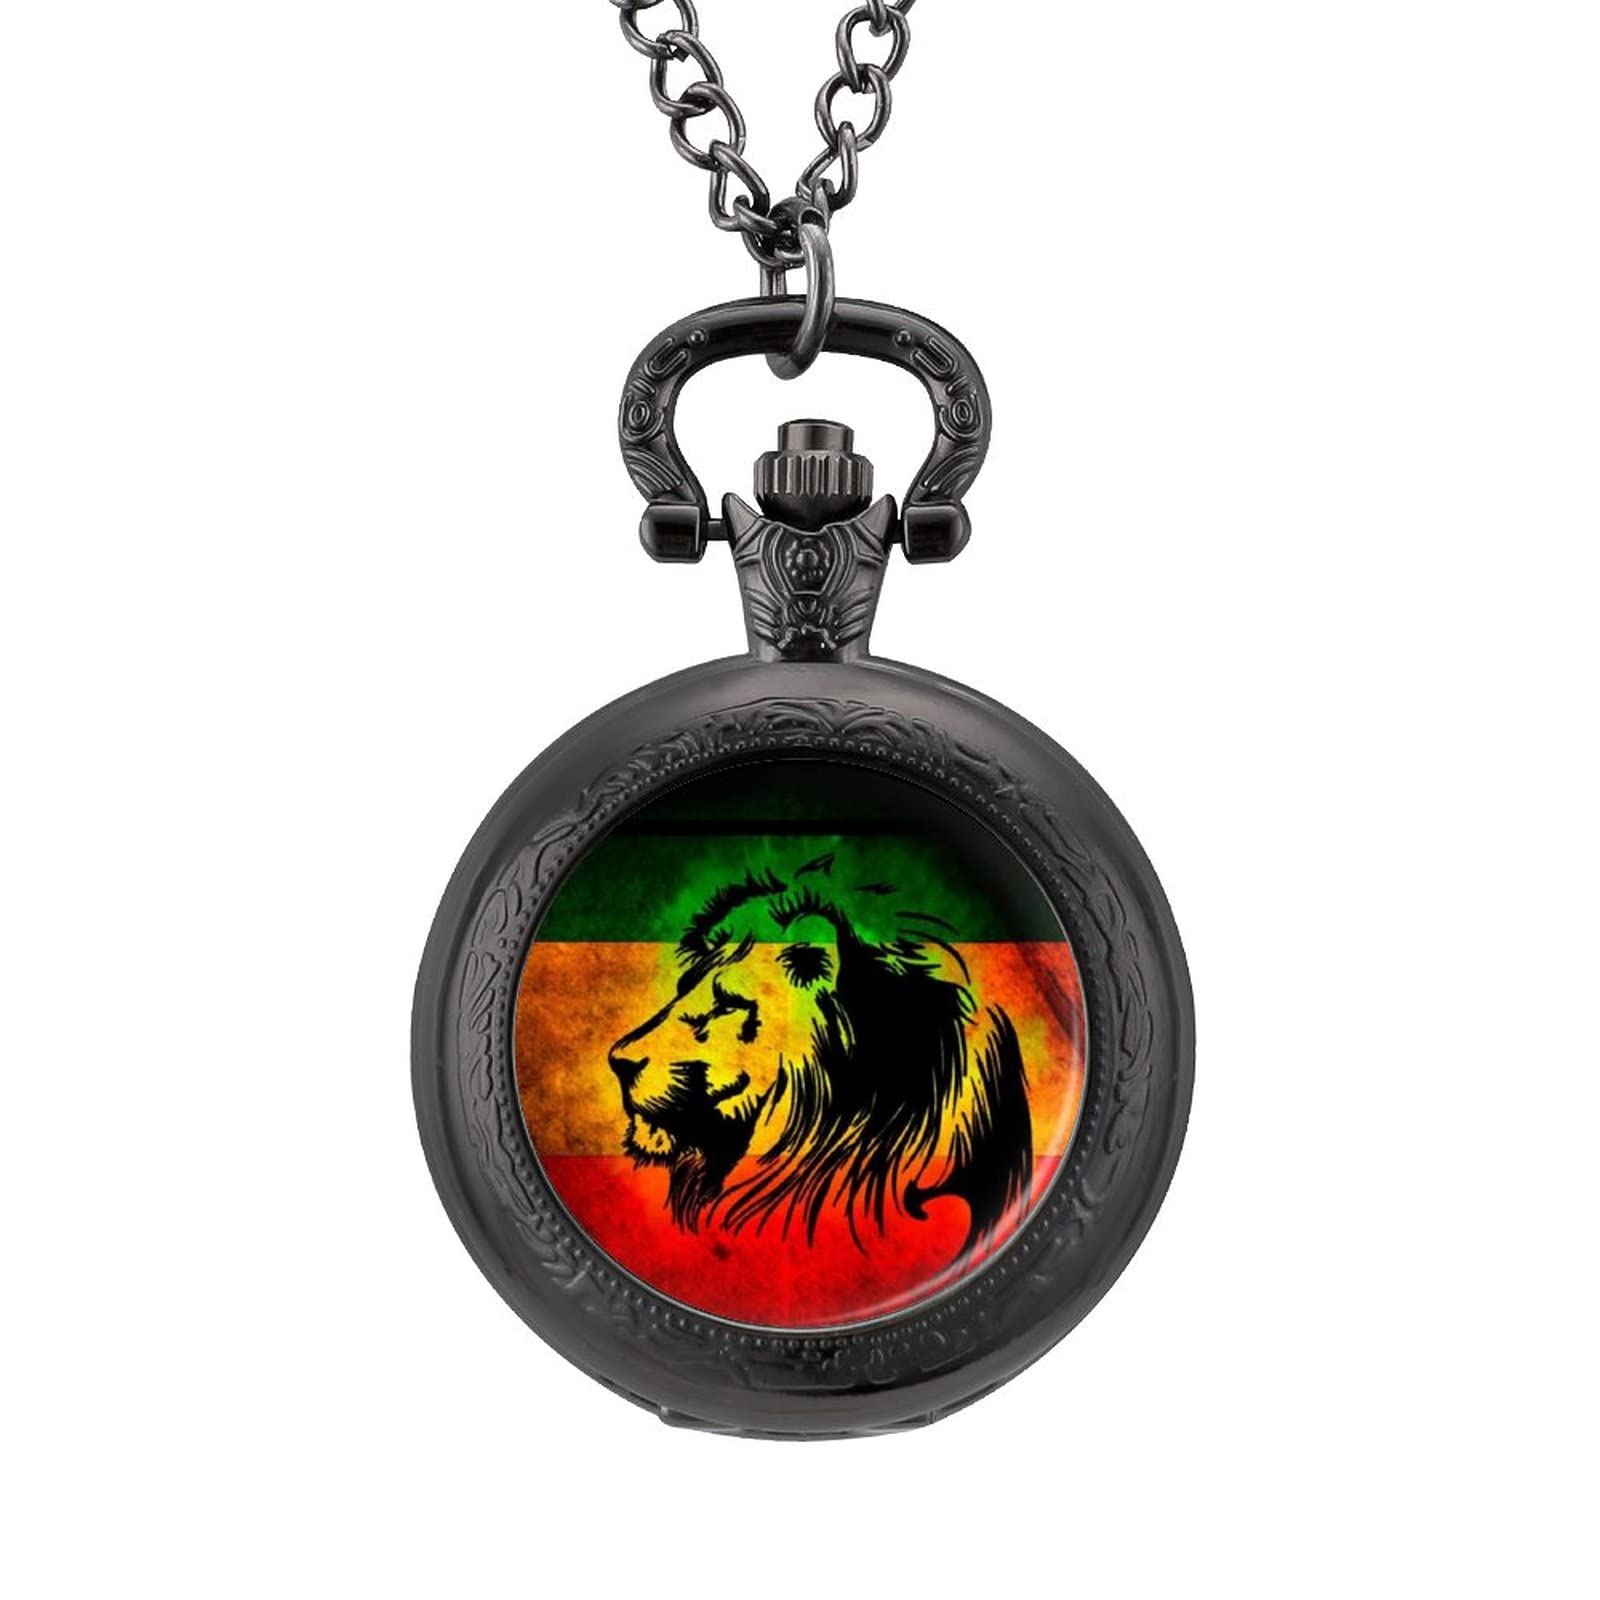 African Flag The Lion Of Judah Rasta Rastafari Jamaica Quartz Pocket Watch Vintage Necklace Watches With Chain For Men Women black-style